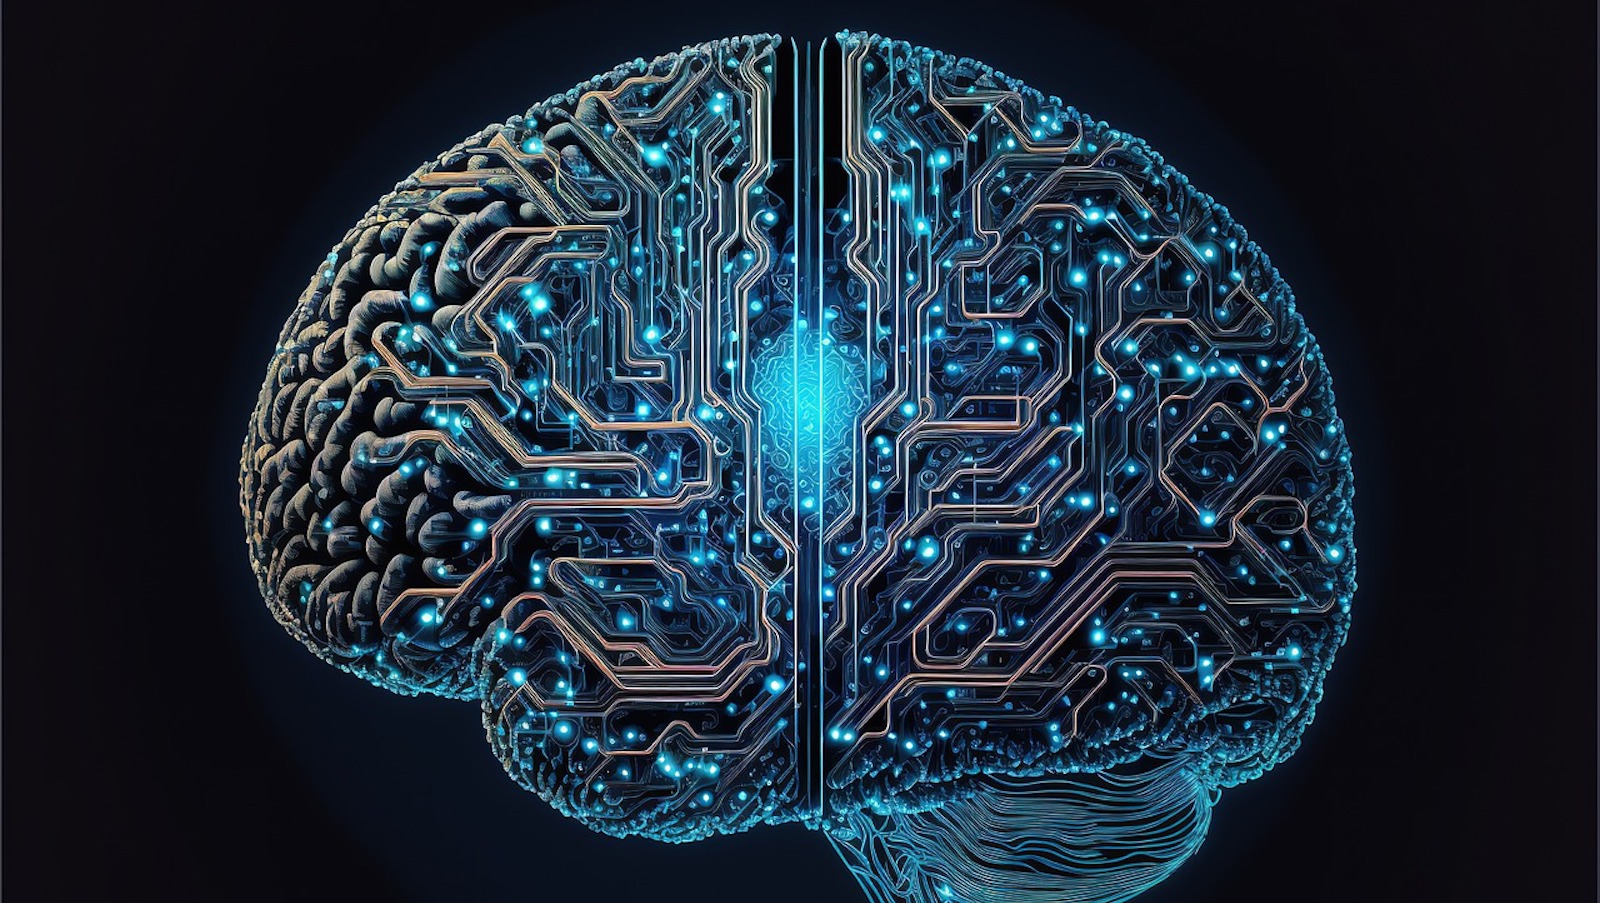 Cyber brain showing innerworkings on a black background